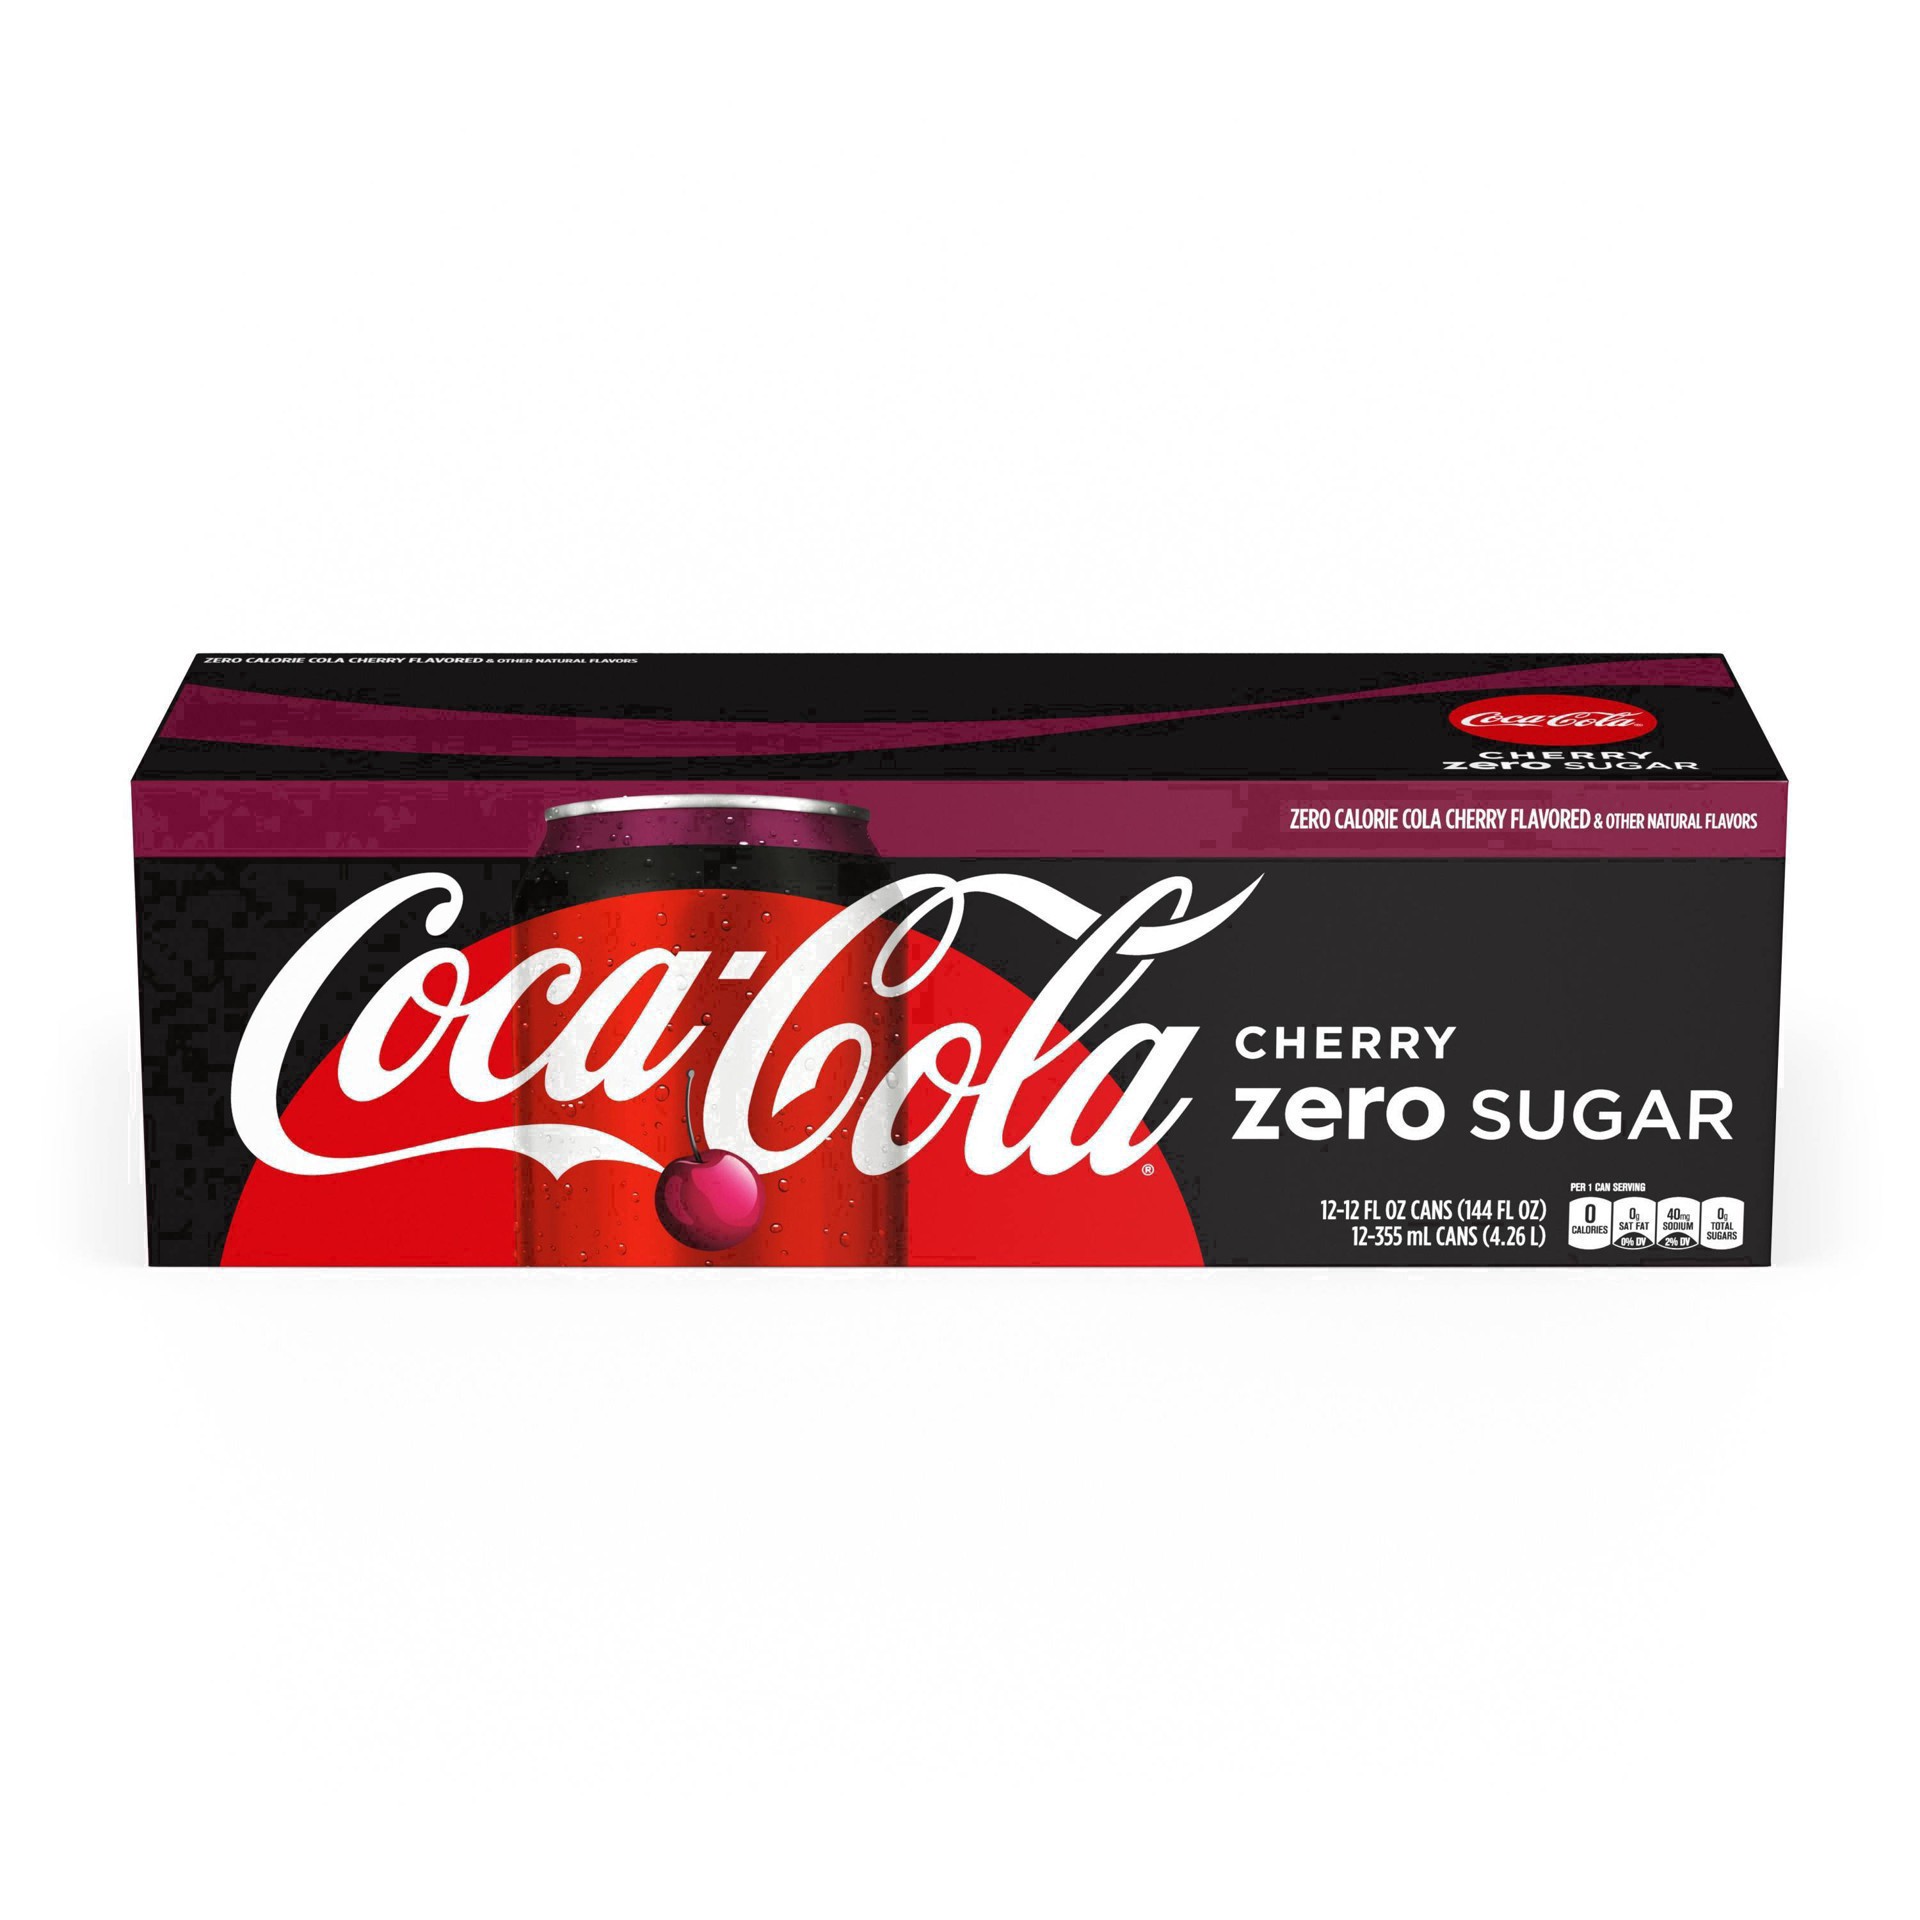 slide 150 of 173, Coca-Cola Cherry Zero Fridge Pack Cans, 12 fl oz, 12 Pack, 12 ct